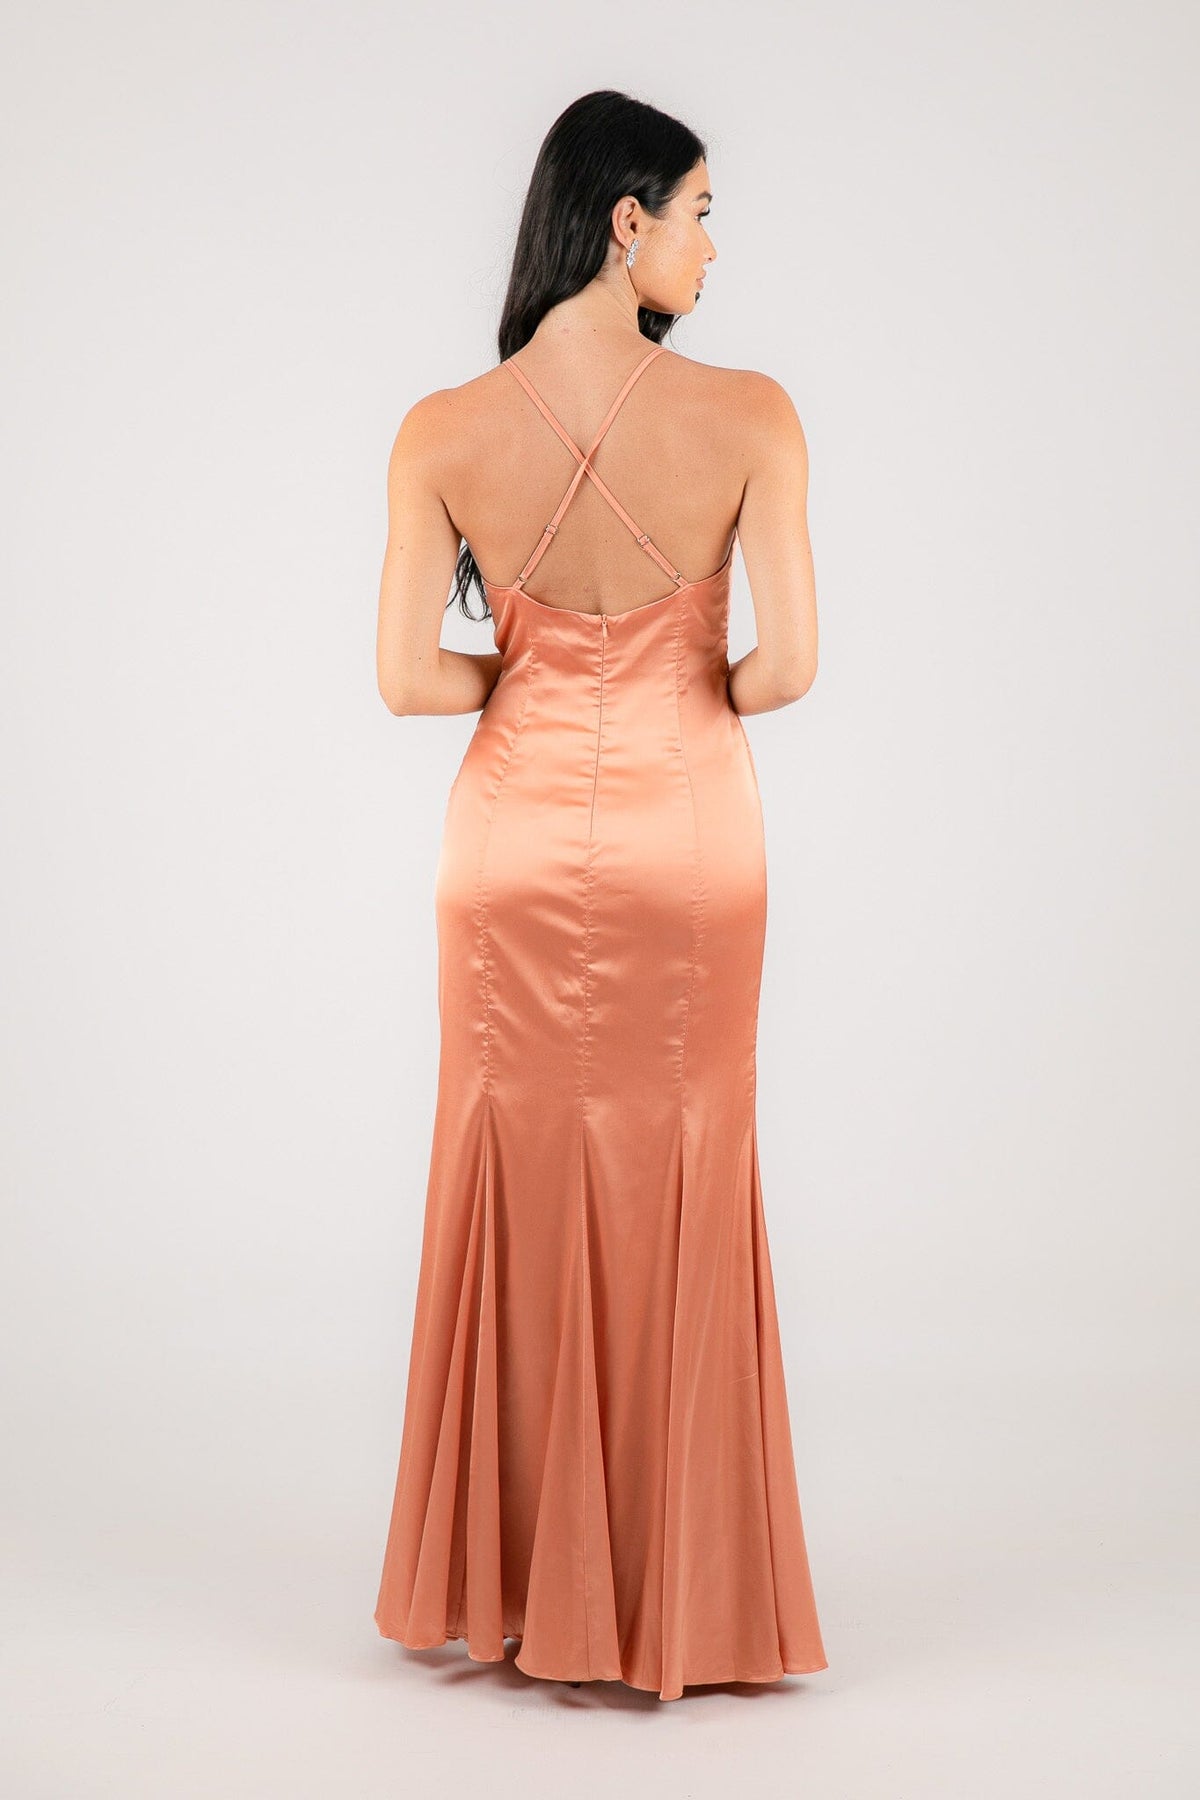 Open Crisscross Back Straps of Peach Orange Coloured Bridesmaid Satin Maxi Dress with V Neckline and Front Split